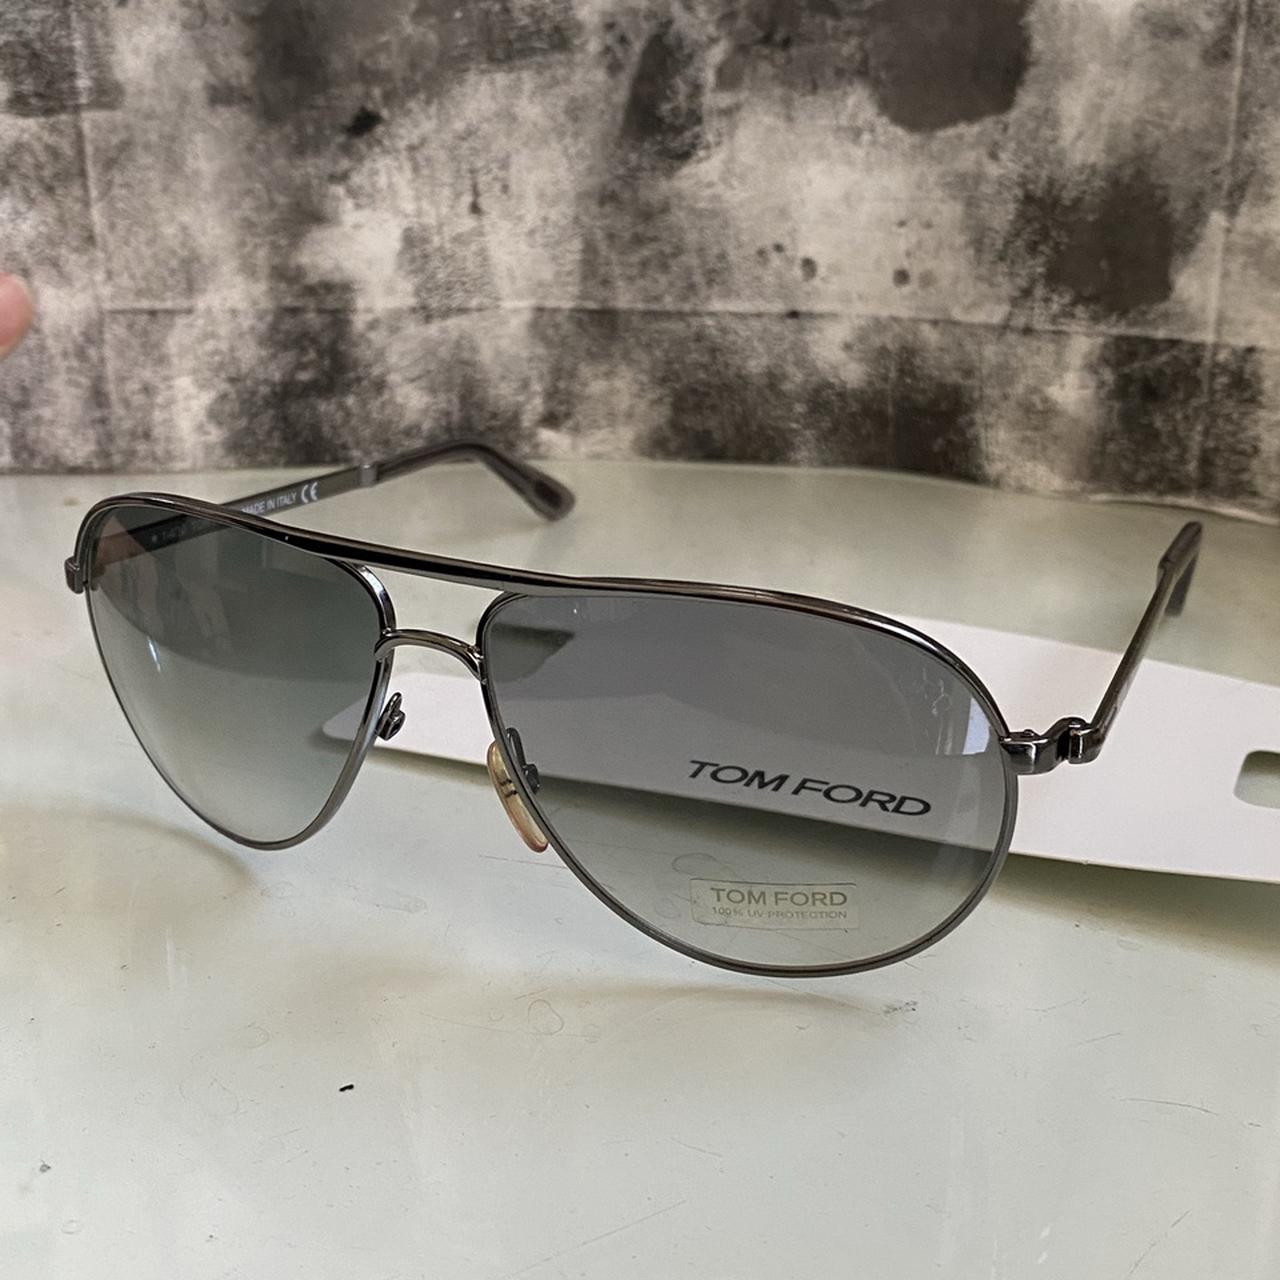 Product Image 2 - Tom Ford aviator sunglasses. Super